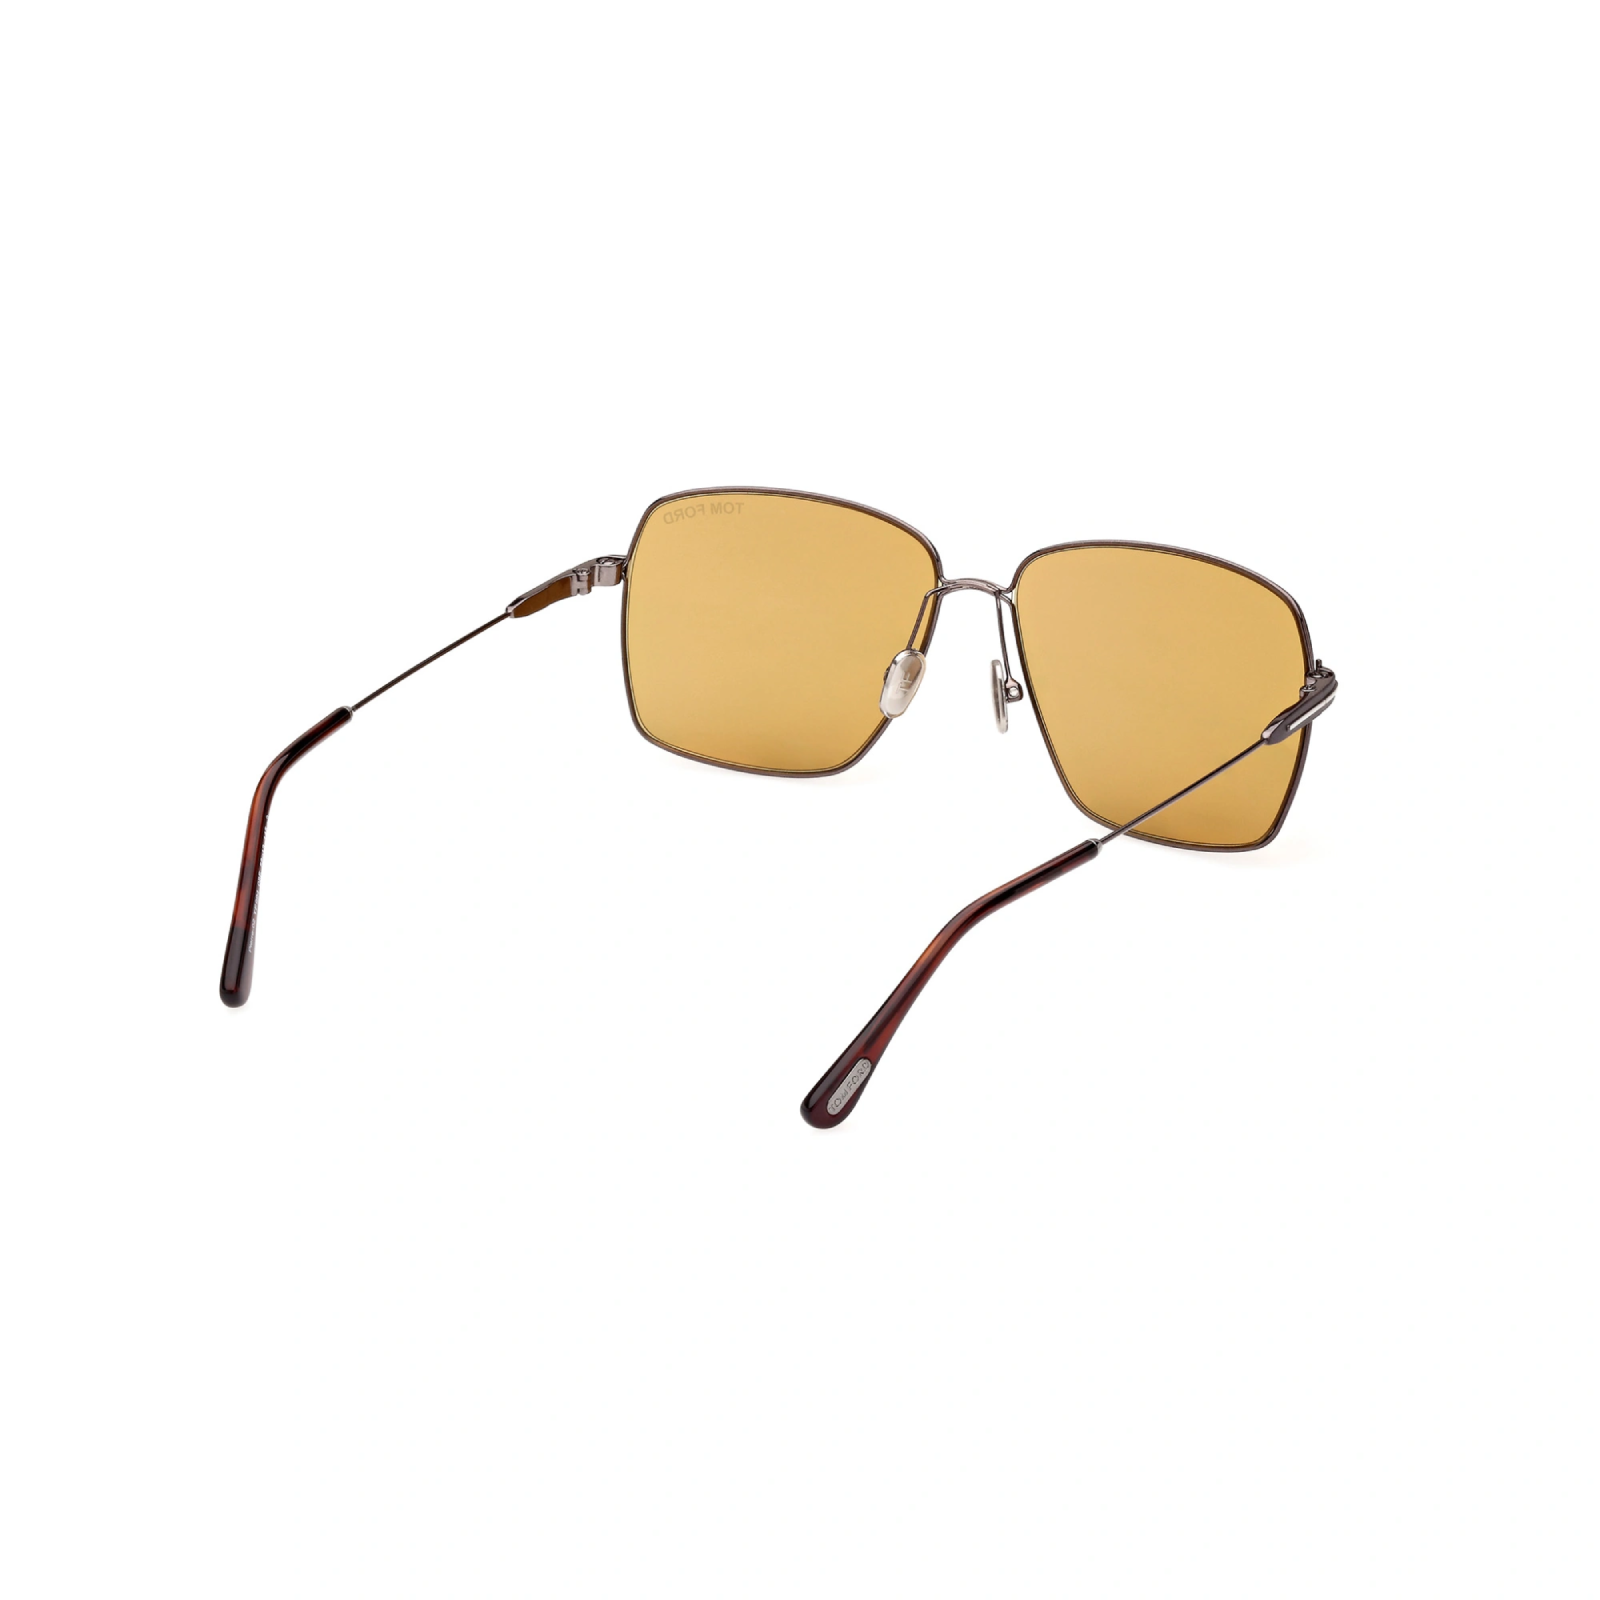 Tom Ford Sunglasses Tom Ford Sunglasses FT0994 08E 58mm Pierre Eyeglasses Eyewear UK USA Australia 